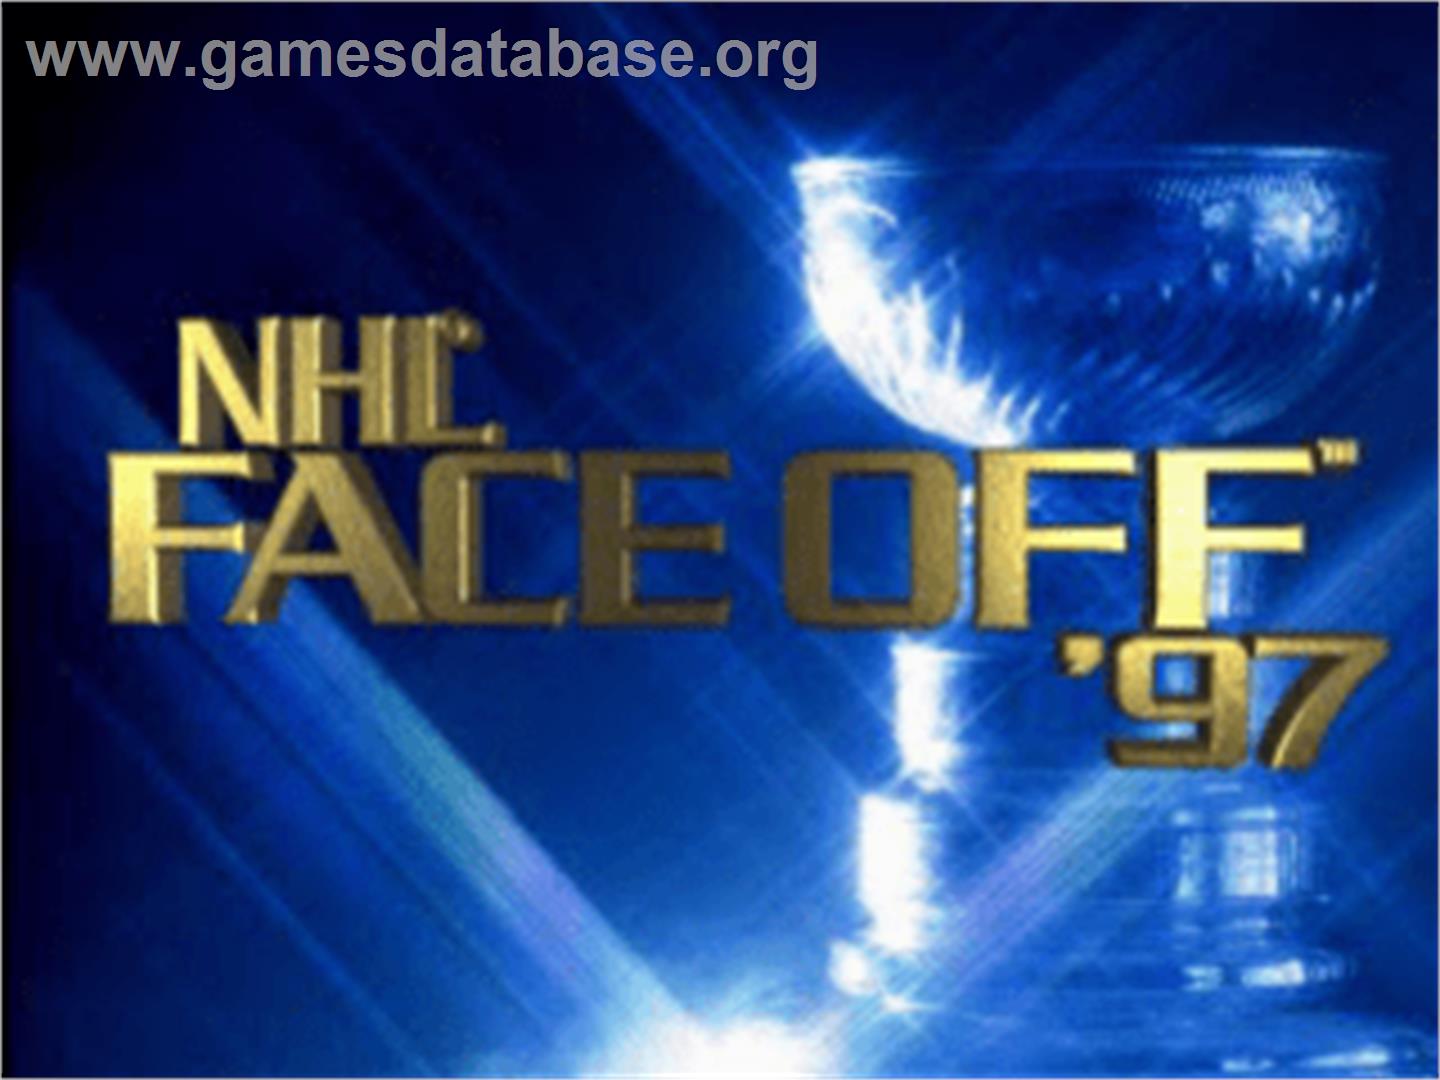 NHL FaceOff '97 - Sony Playstation - Artwork - Title Screen